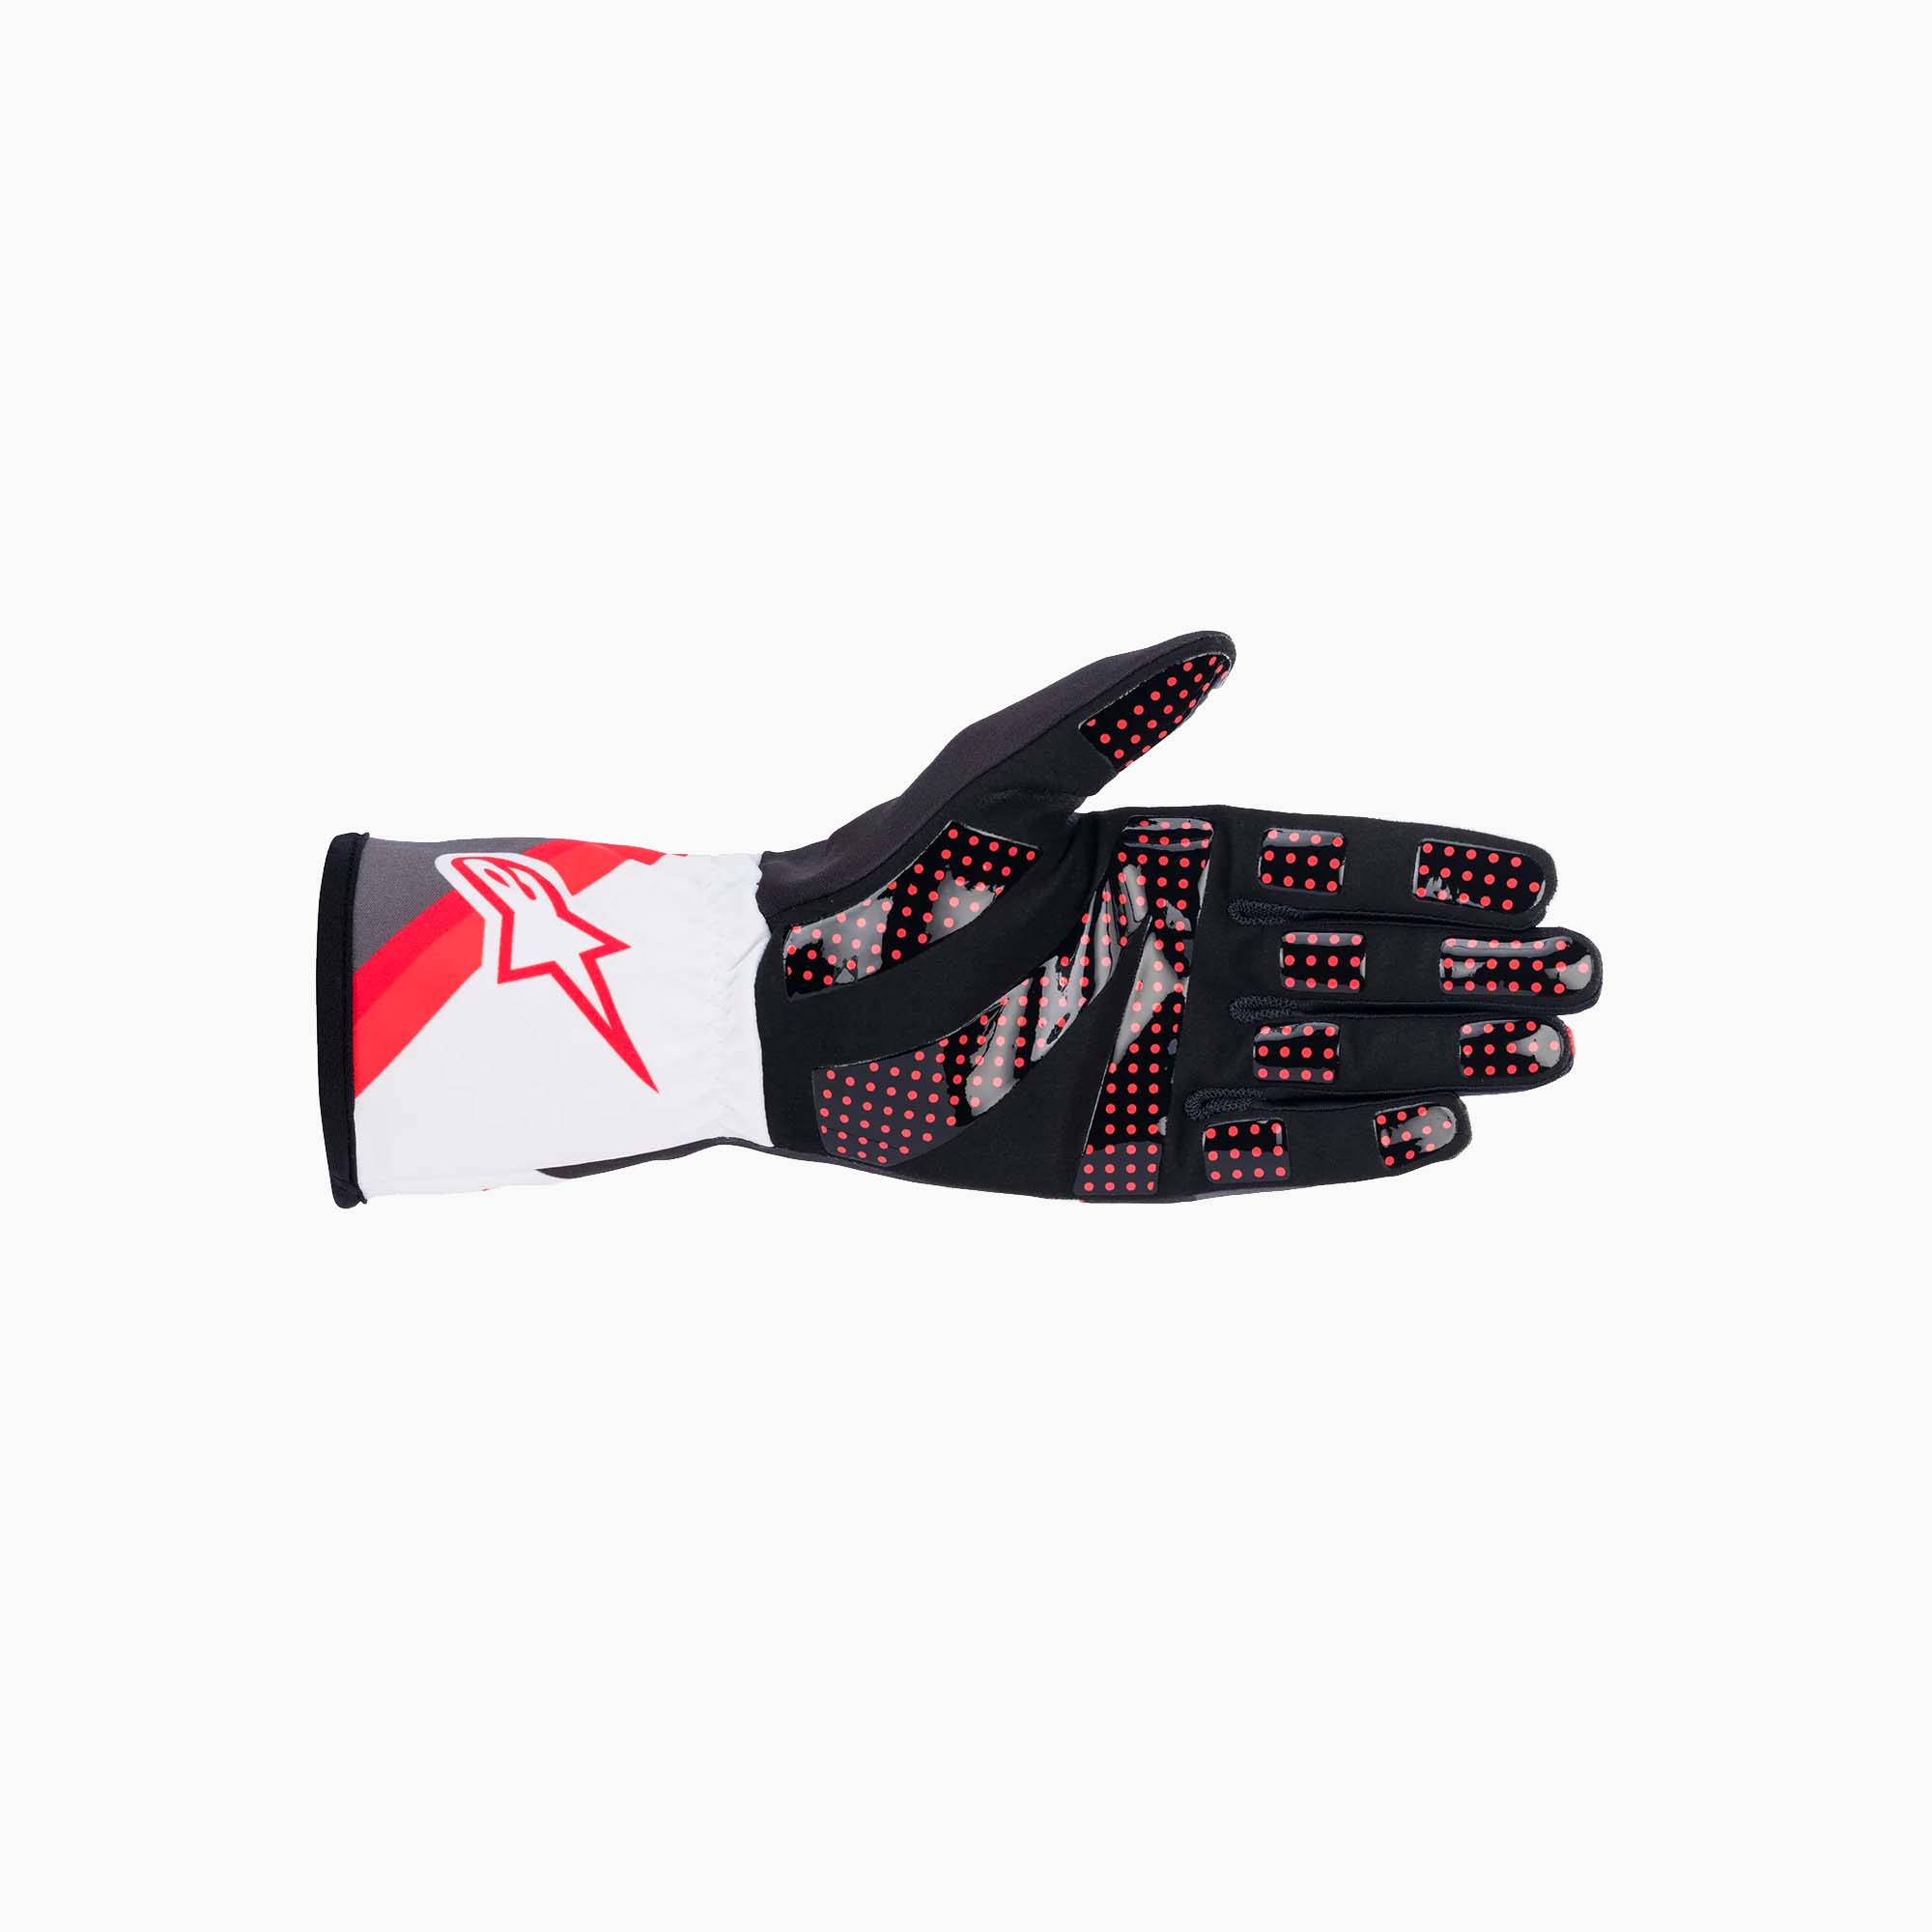 Alpinestars | Tech-1 K Race S V2 Red Graphic Youth Karting Gloves-Karting Gloves-Alpinestars-gpx-store